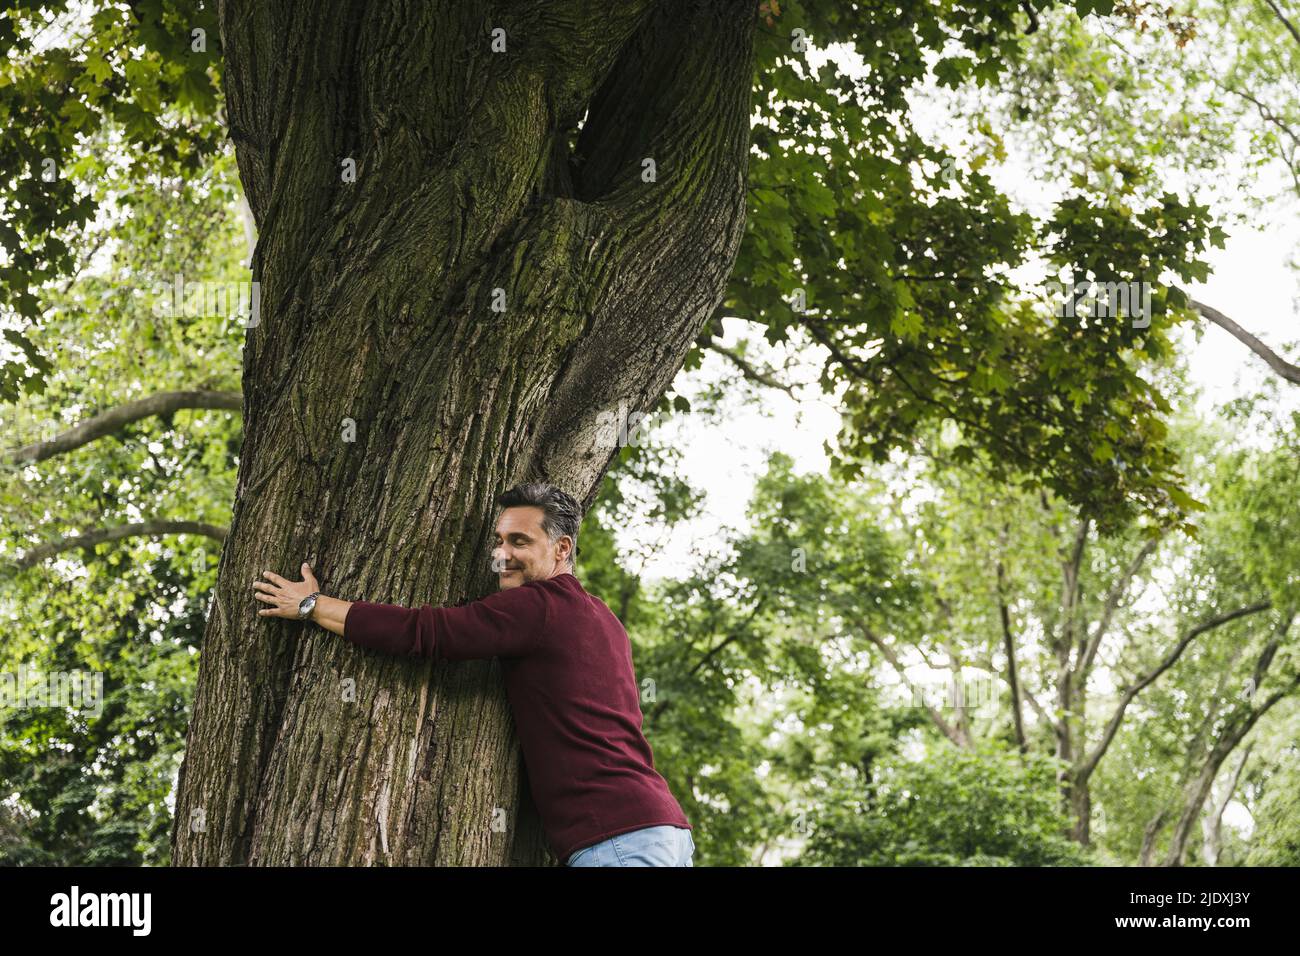 Smiling man hugging tree in park Stock Photo